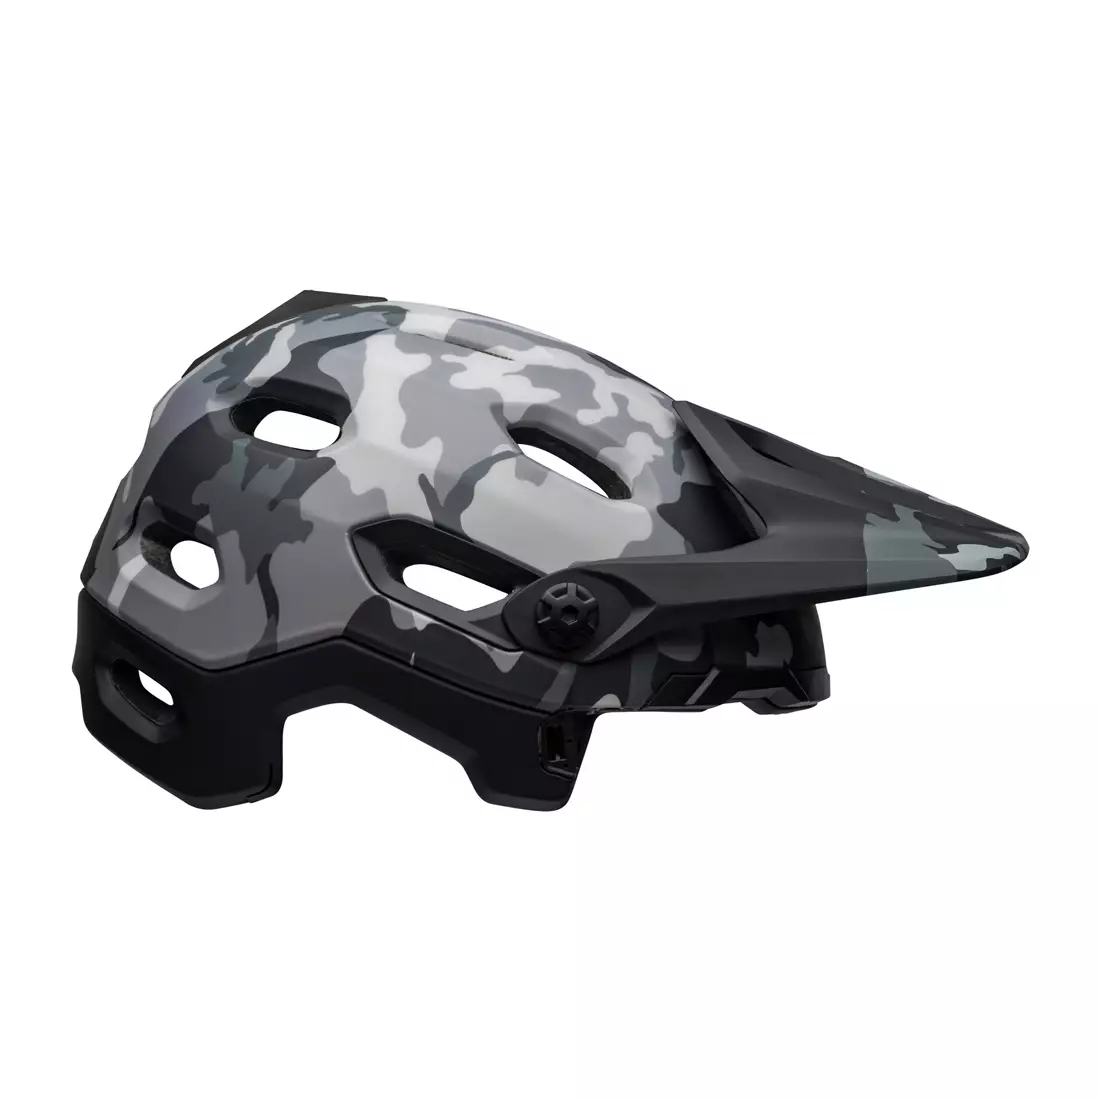 BELL SUPER DH MIPS SPHERICAL helma na kola s plným obličejem, matte gloss black camo